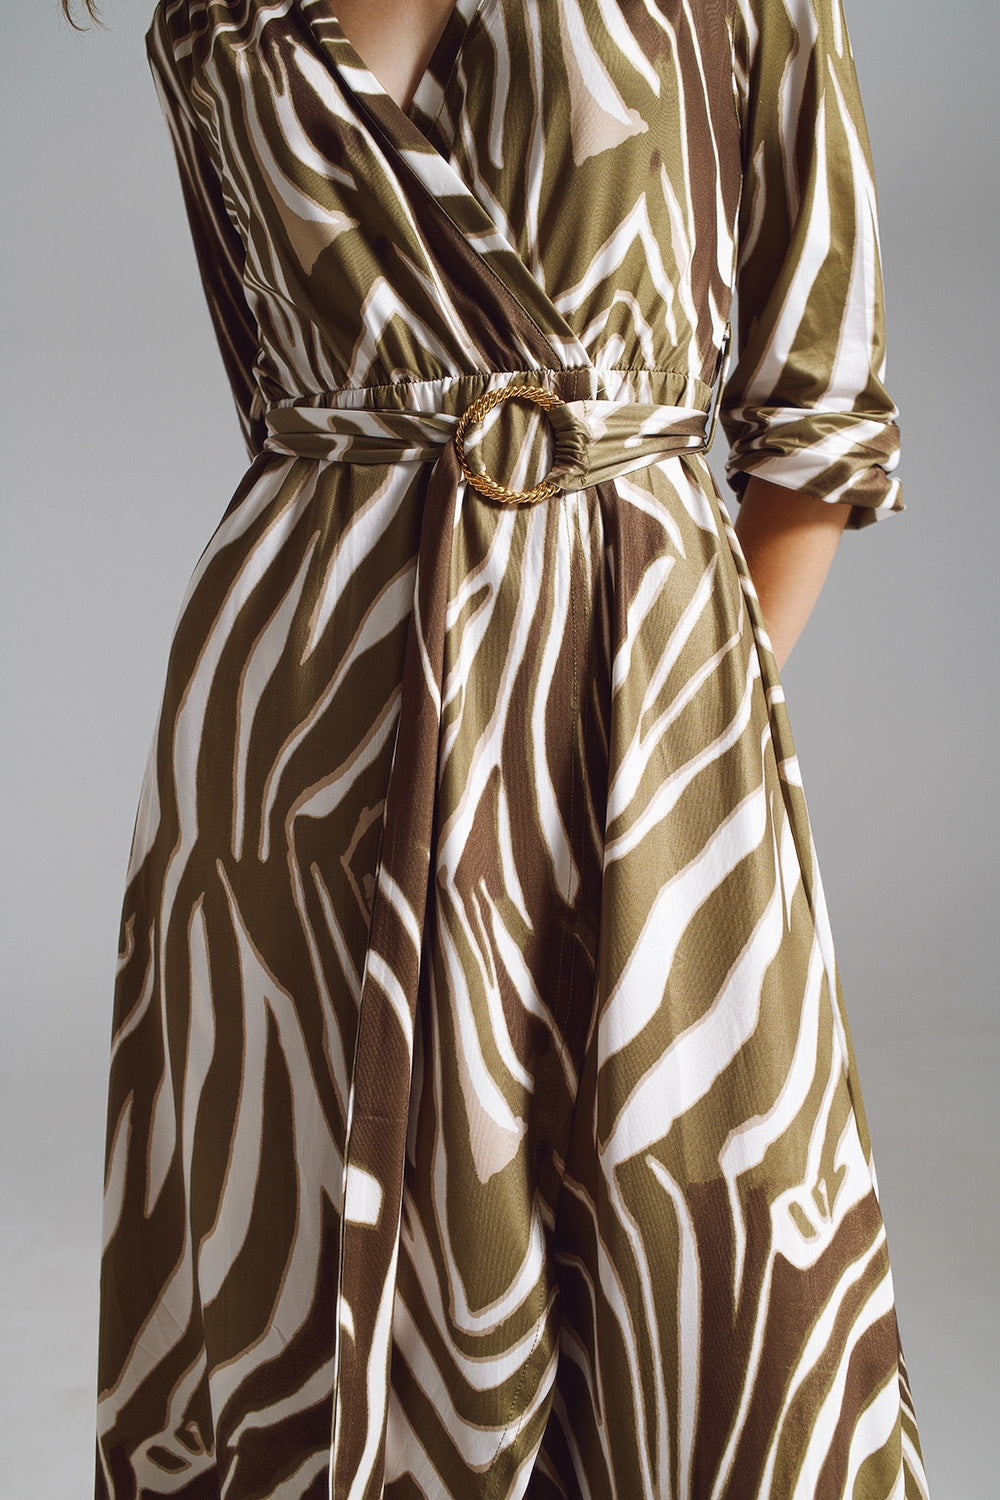 Midi Belted Wrap Dress in Olive Green and Cream Zebra Print